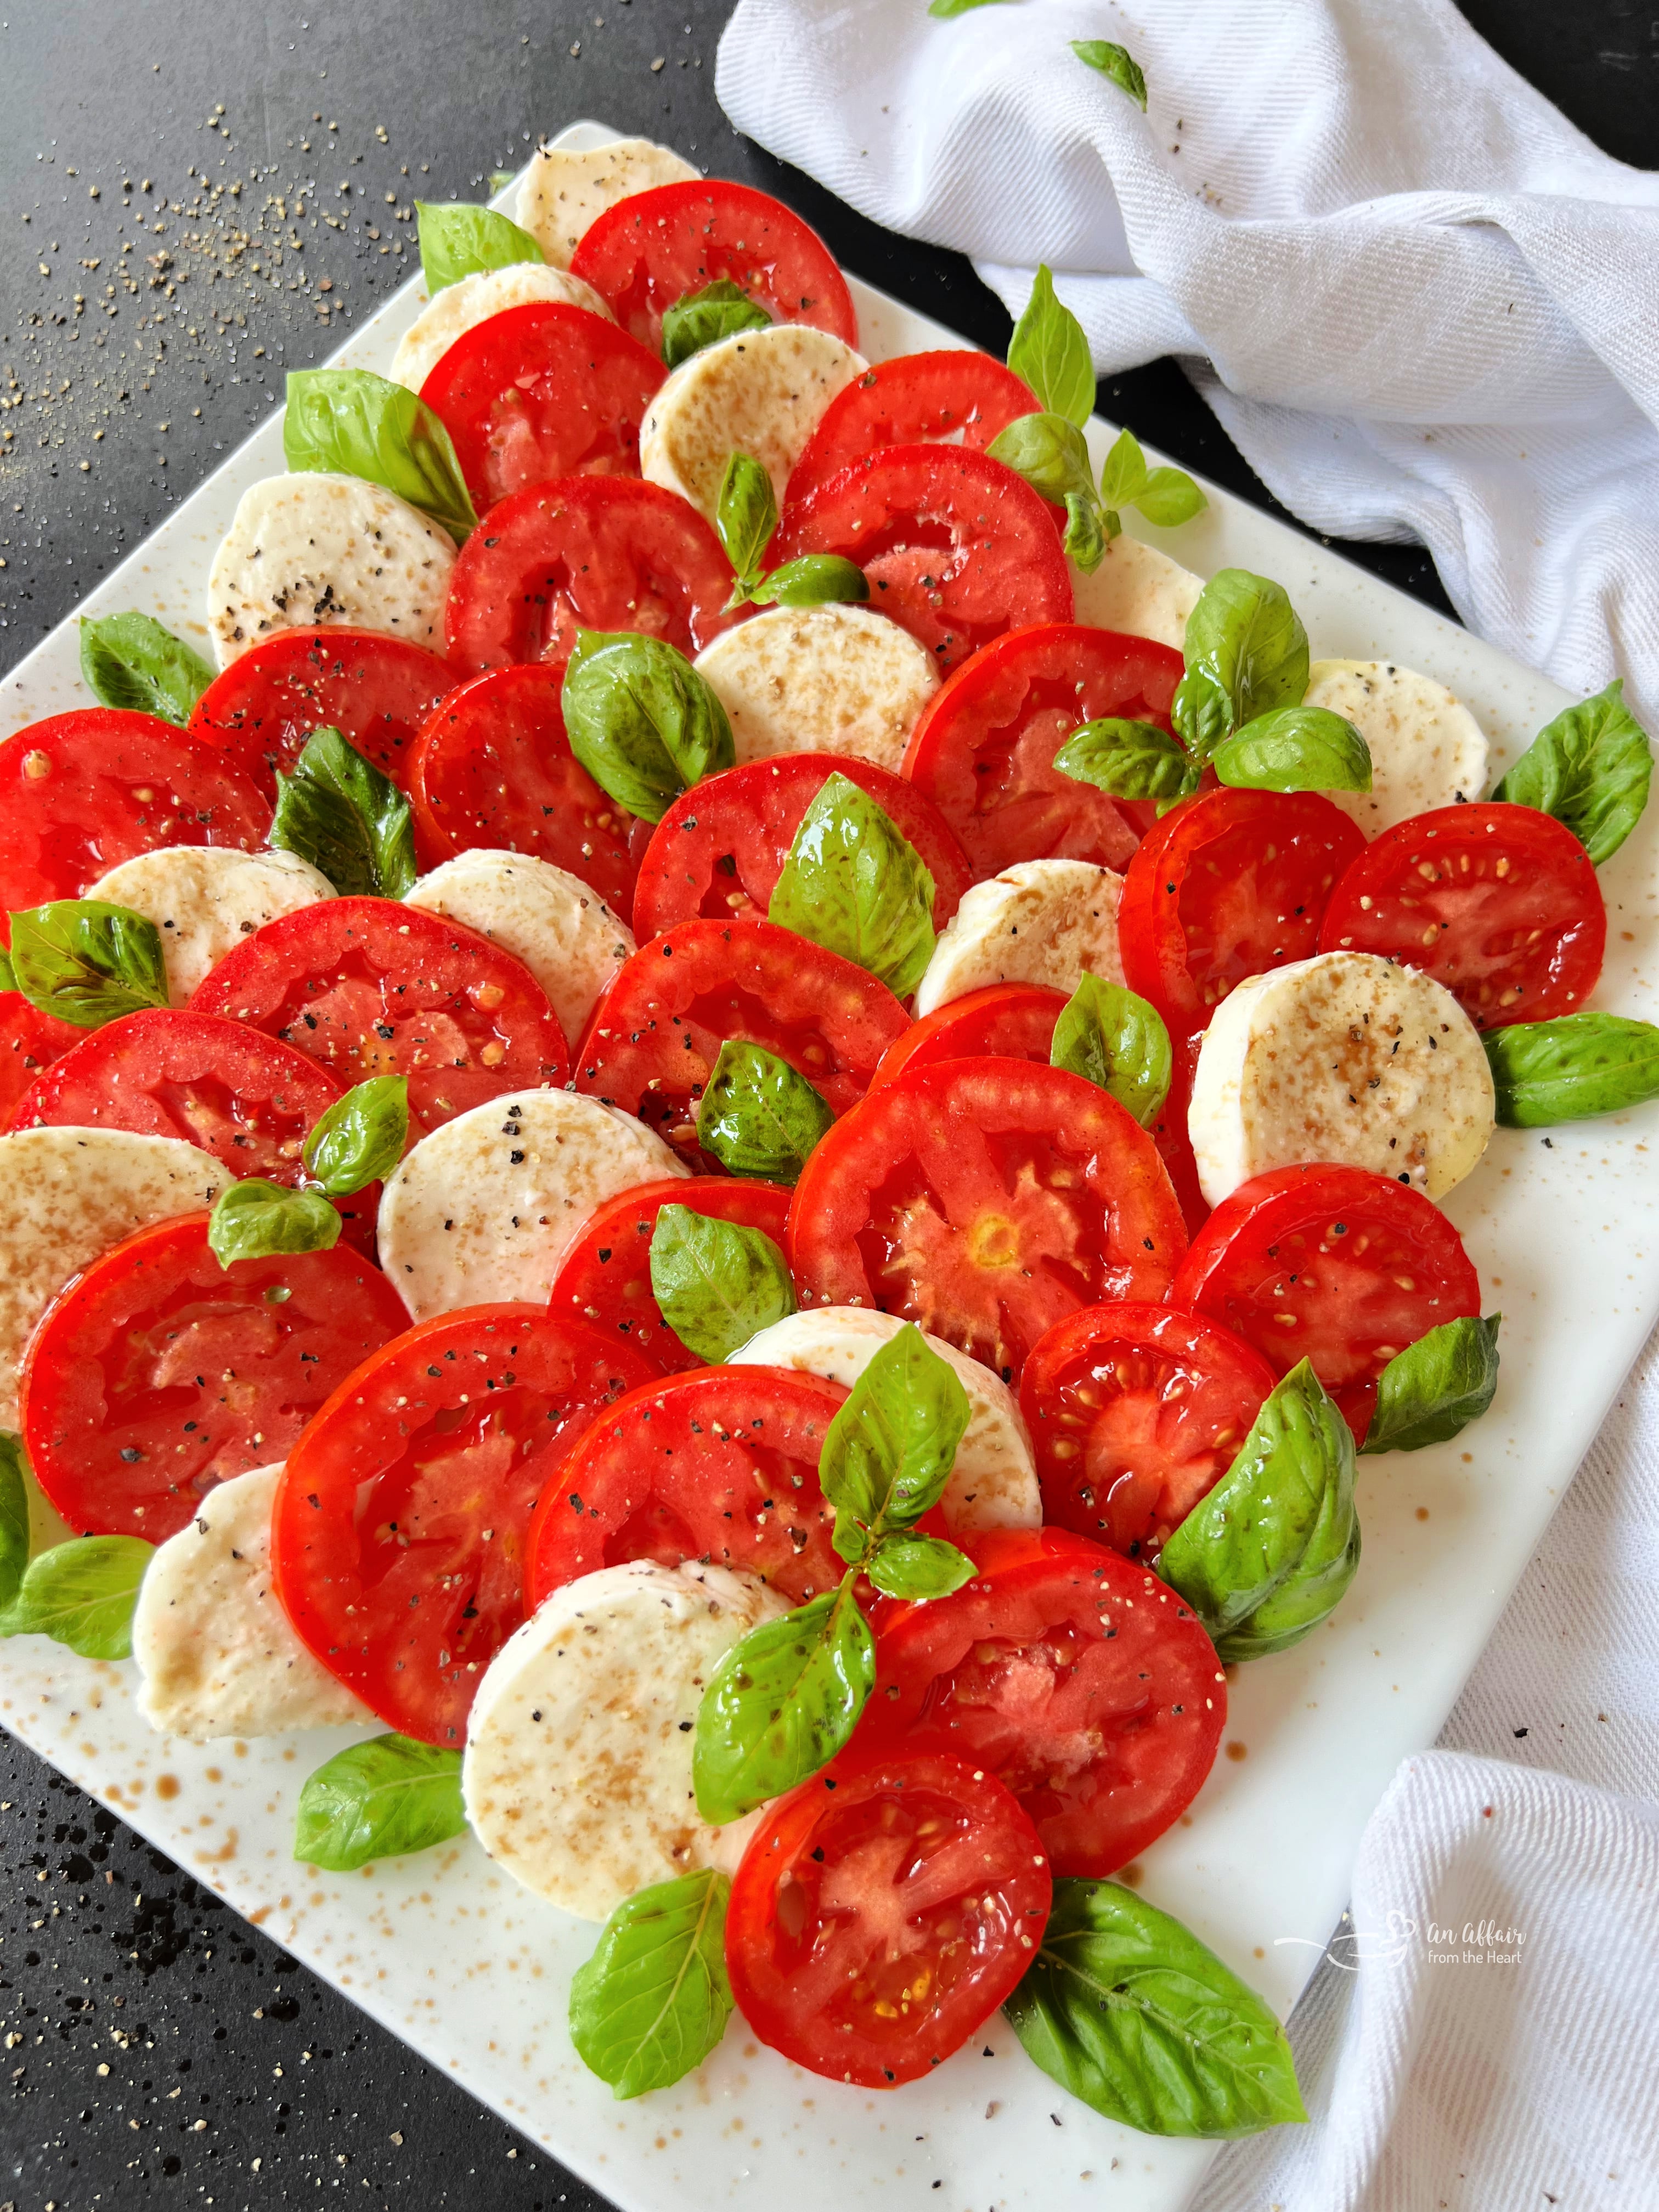 Caprese Salad (Tomatoes with Mozzarella and Basil)